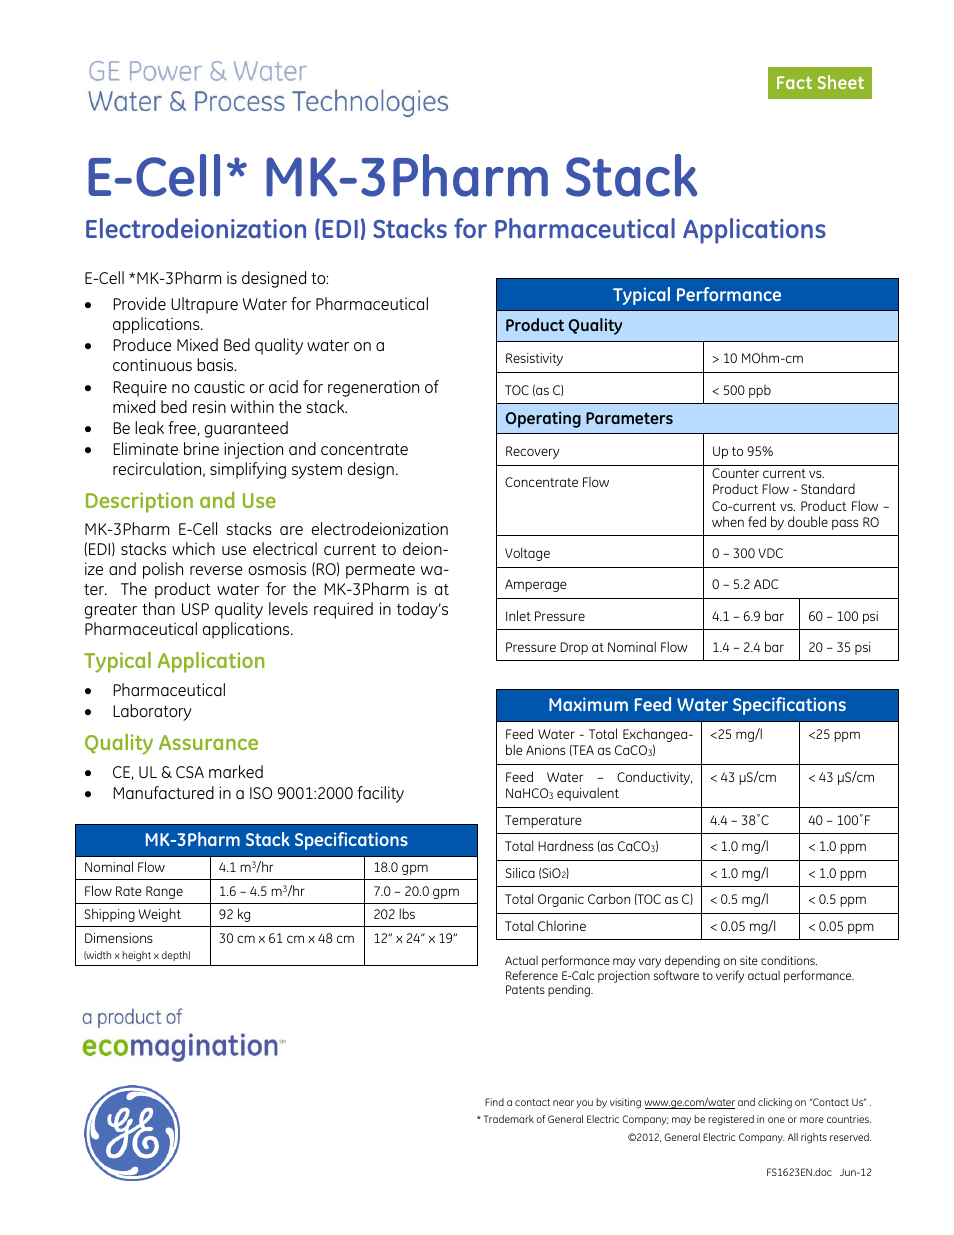 Electrodeionization (EDI) - E-Cell MK-3Pharm Stack